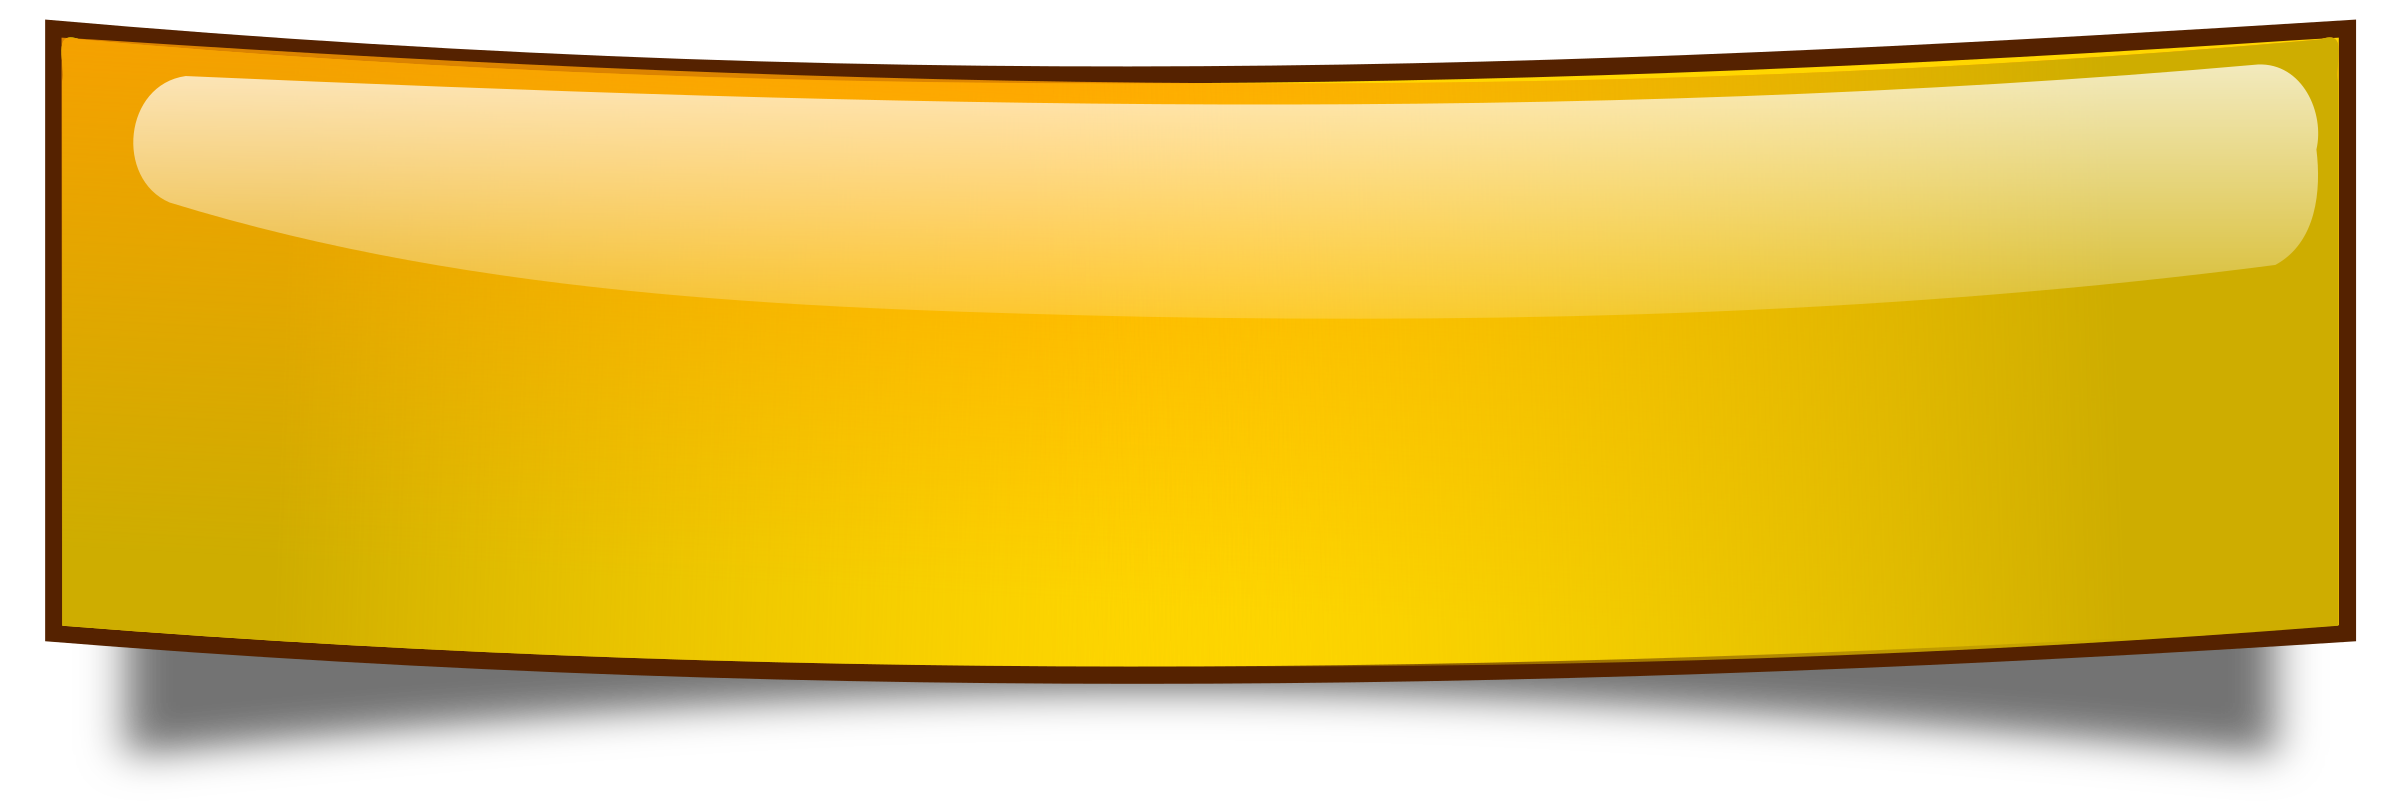 Orange Banner PNG Transparent Background, Free Download #40207 -  FreeIconsPNG